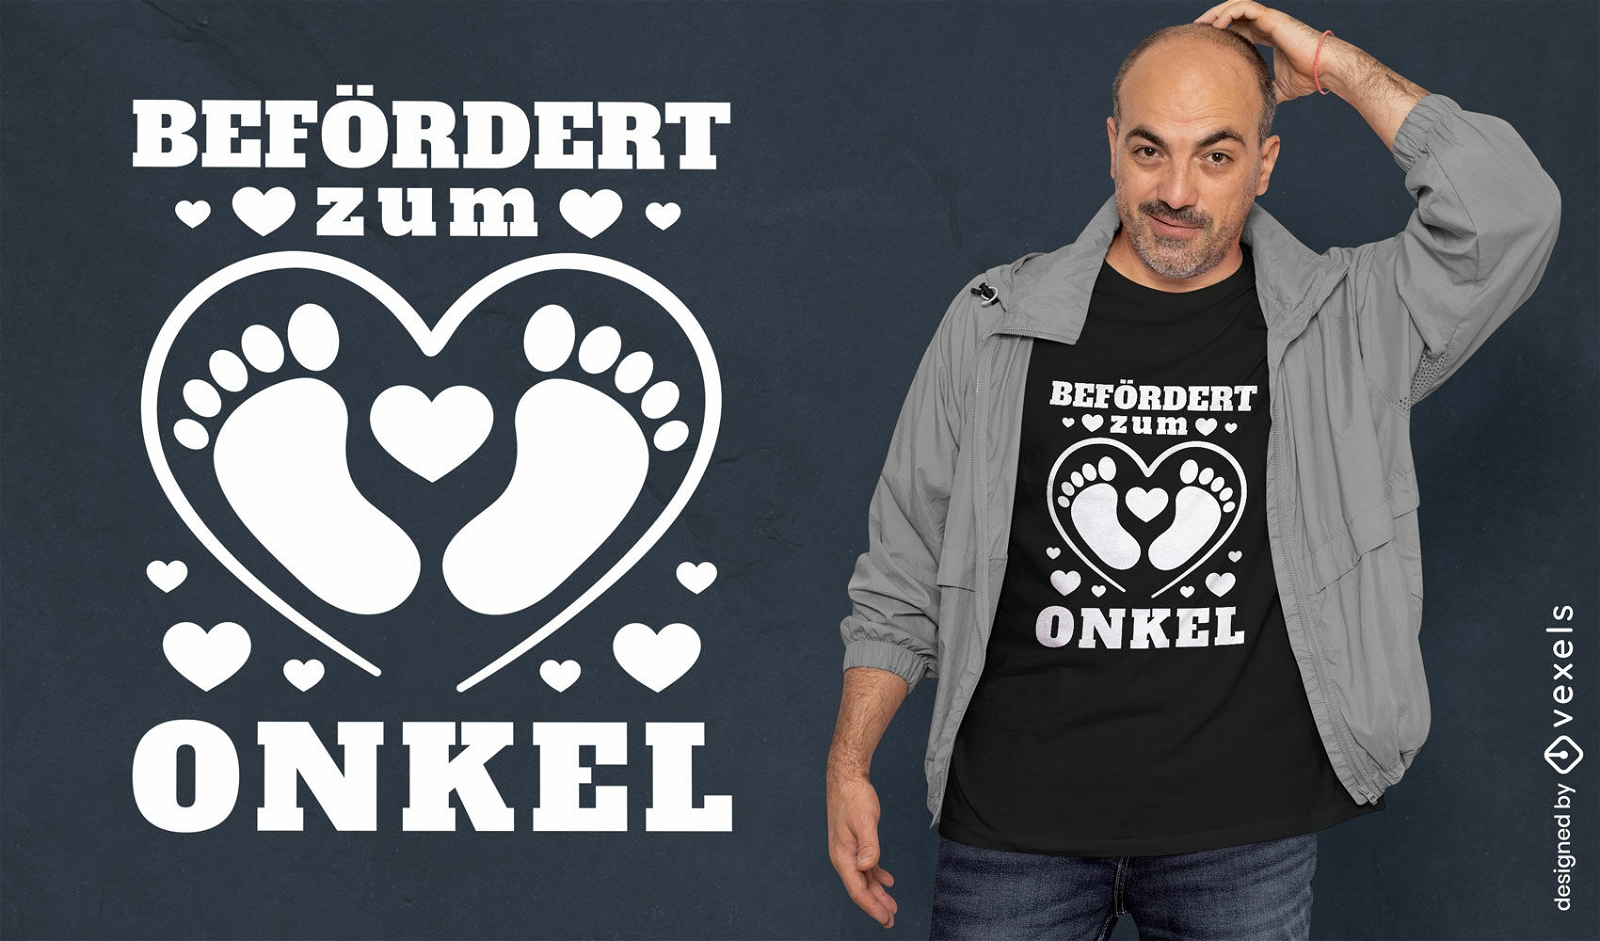 Onkel deutsches Zitat T-Shirt Design